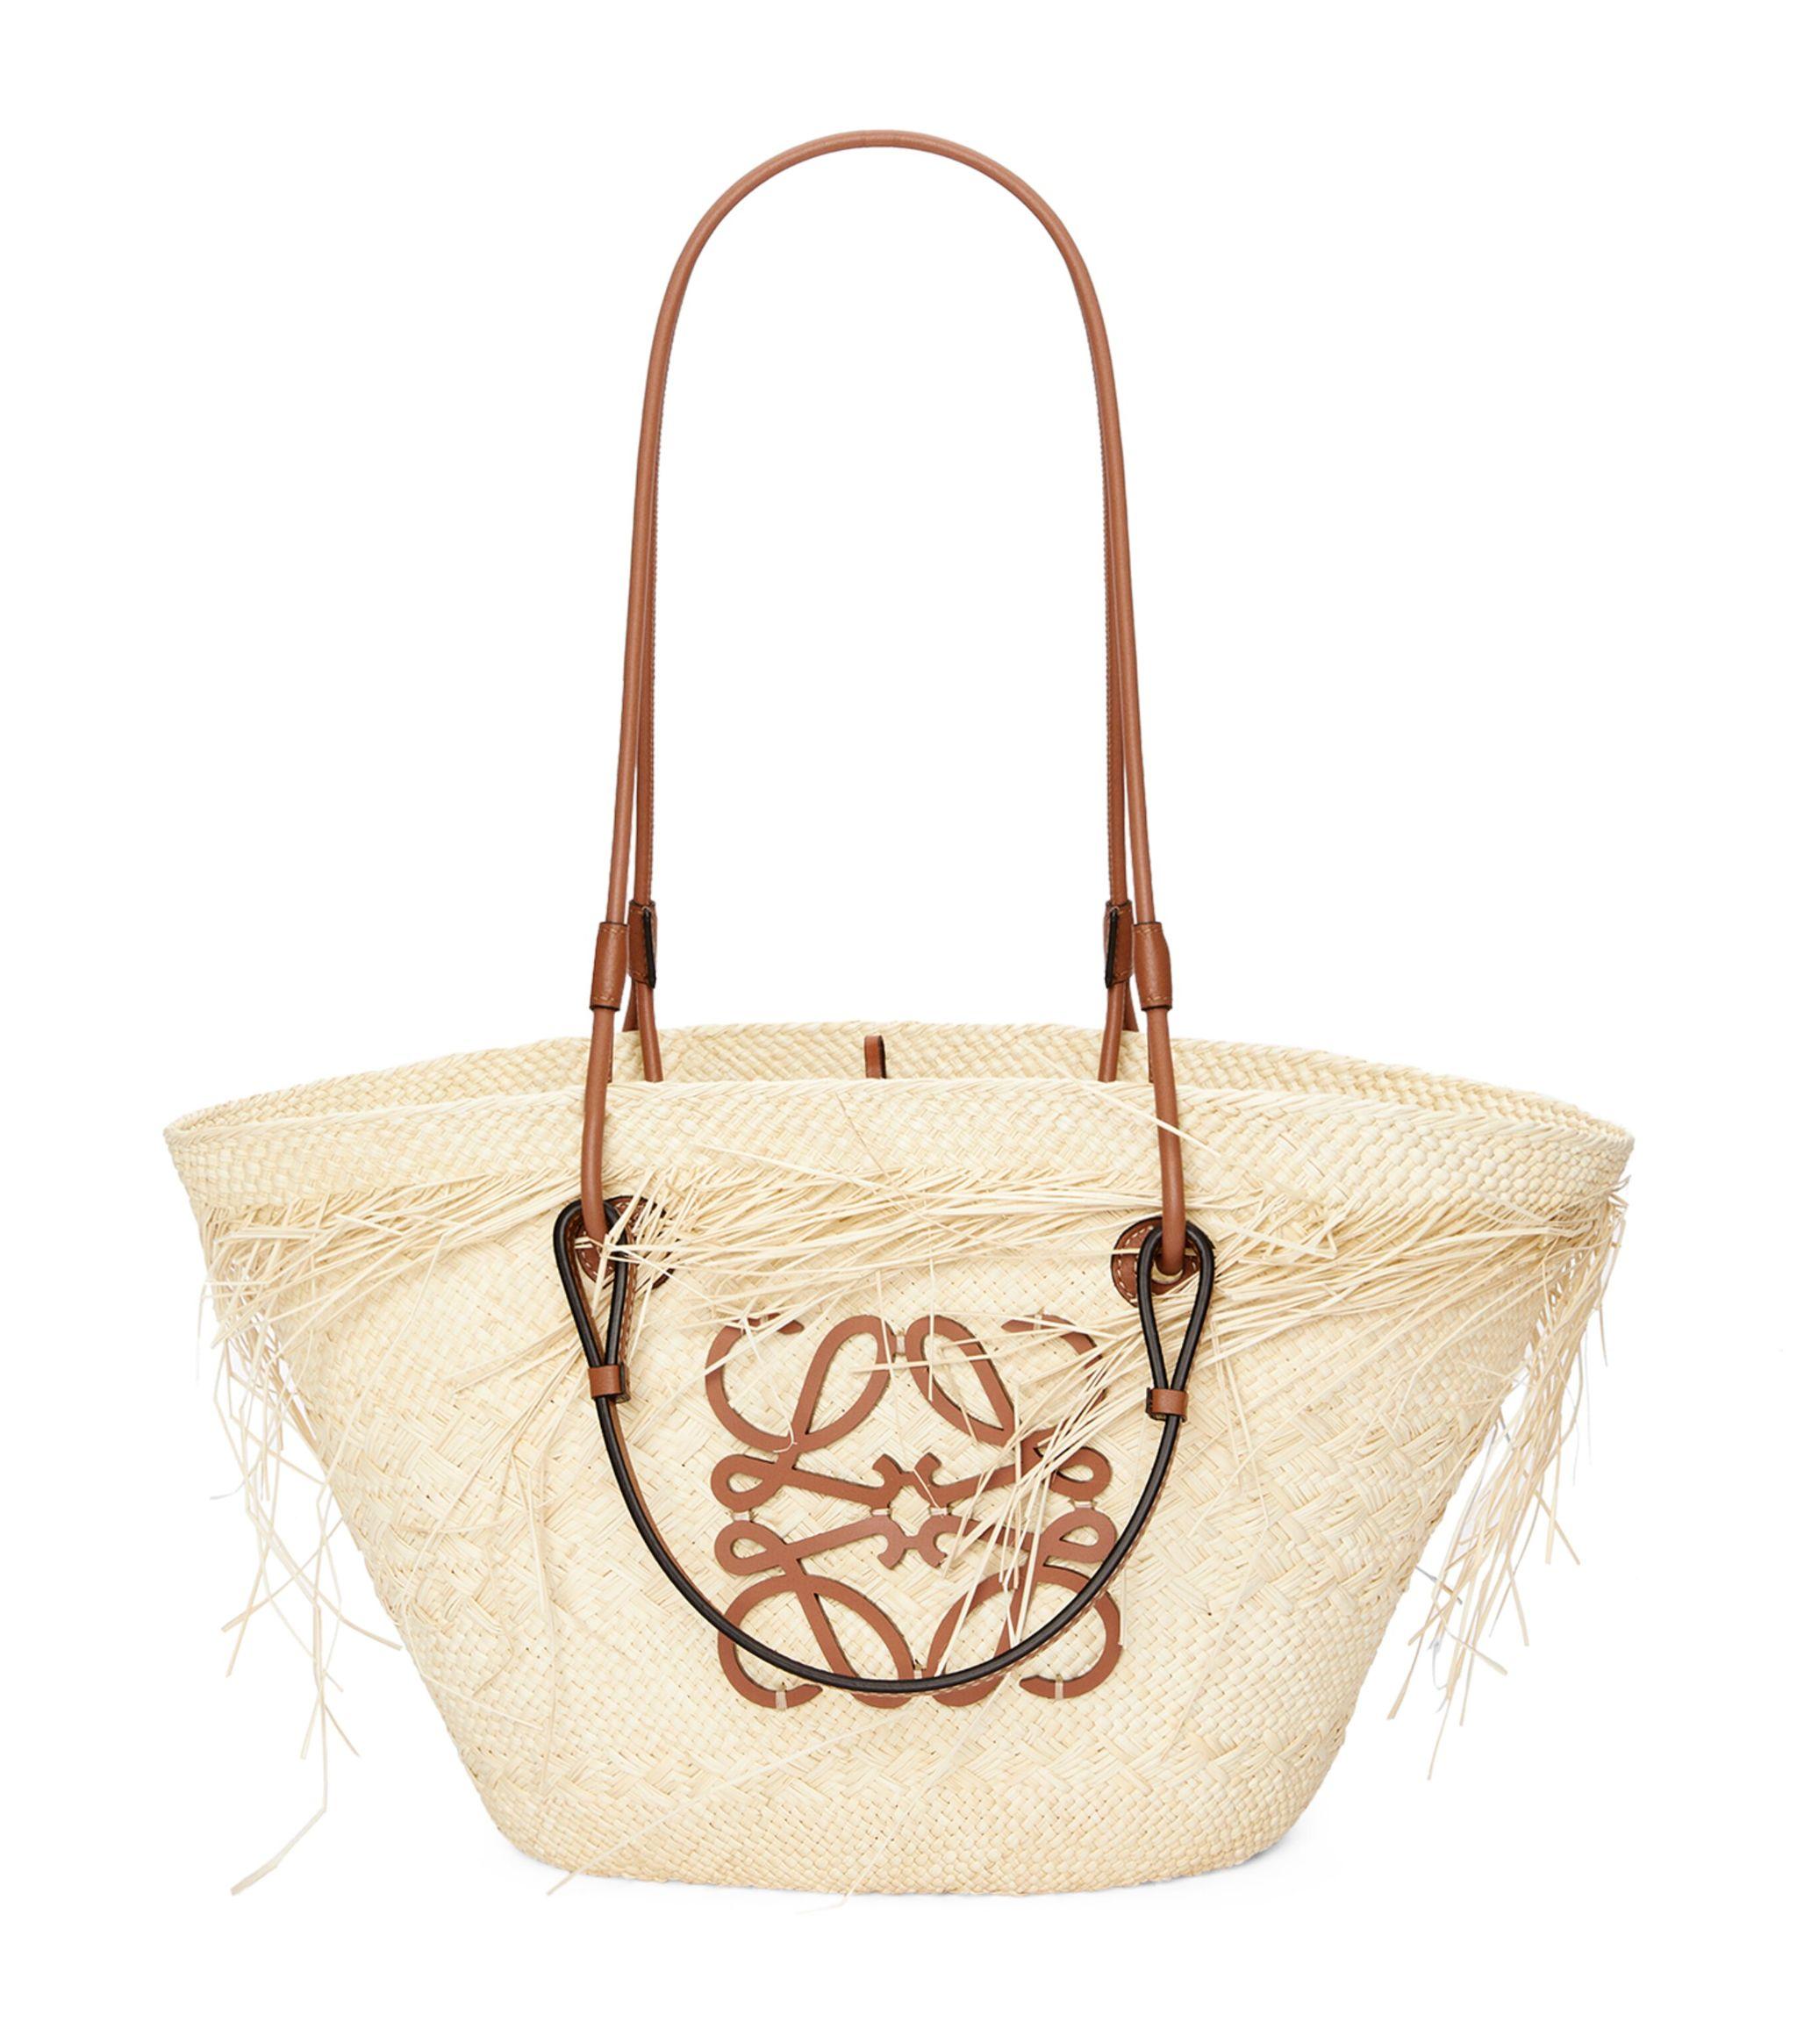 Loewe Women's Anagram Basket Bag